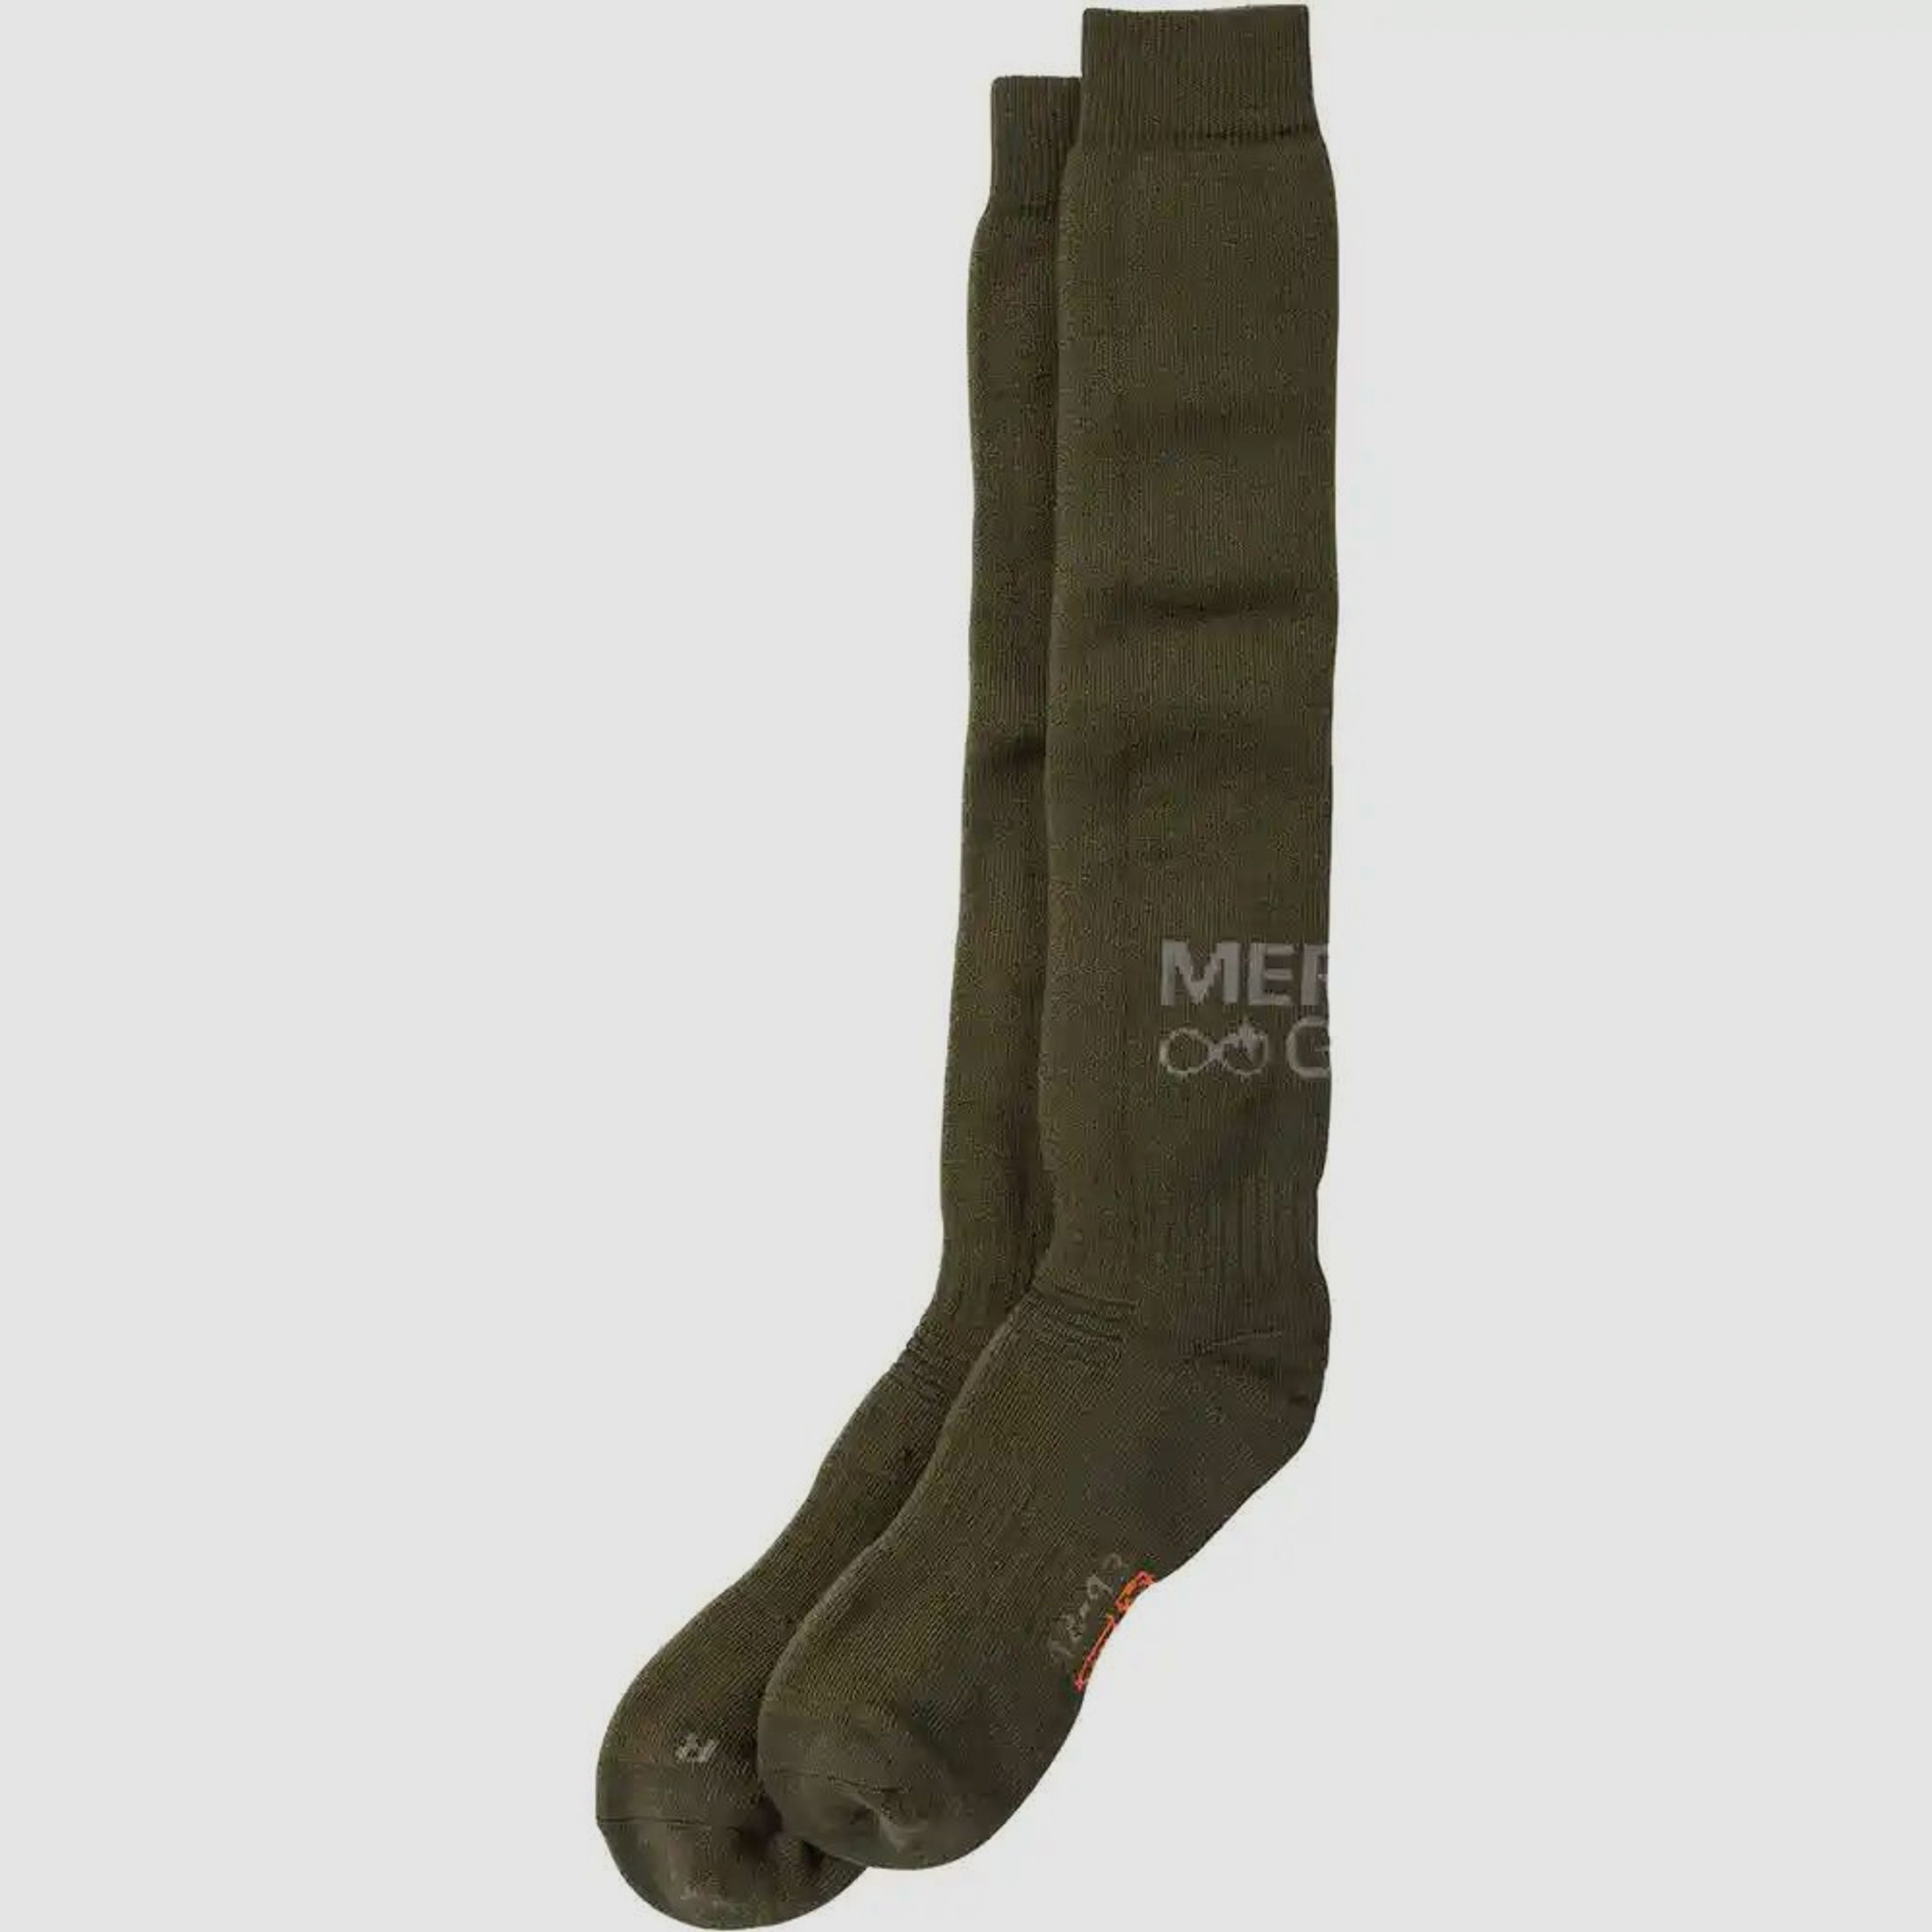 Merkel Gear Merino WNTR Socks - Strümpfe Größe: 1 (39/41)